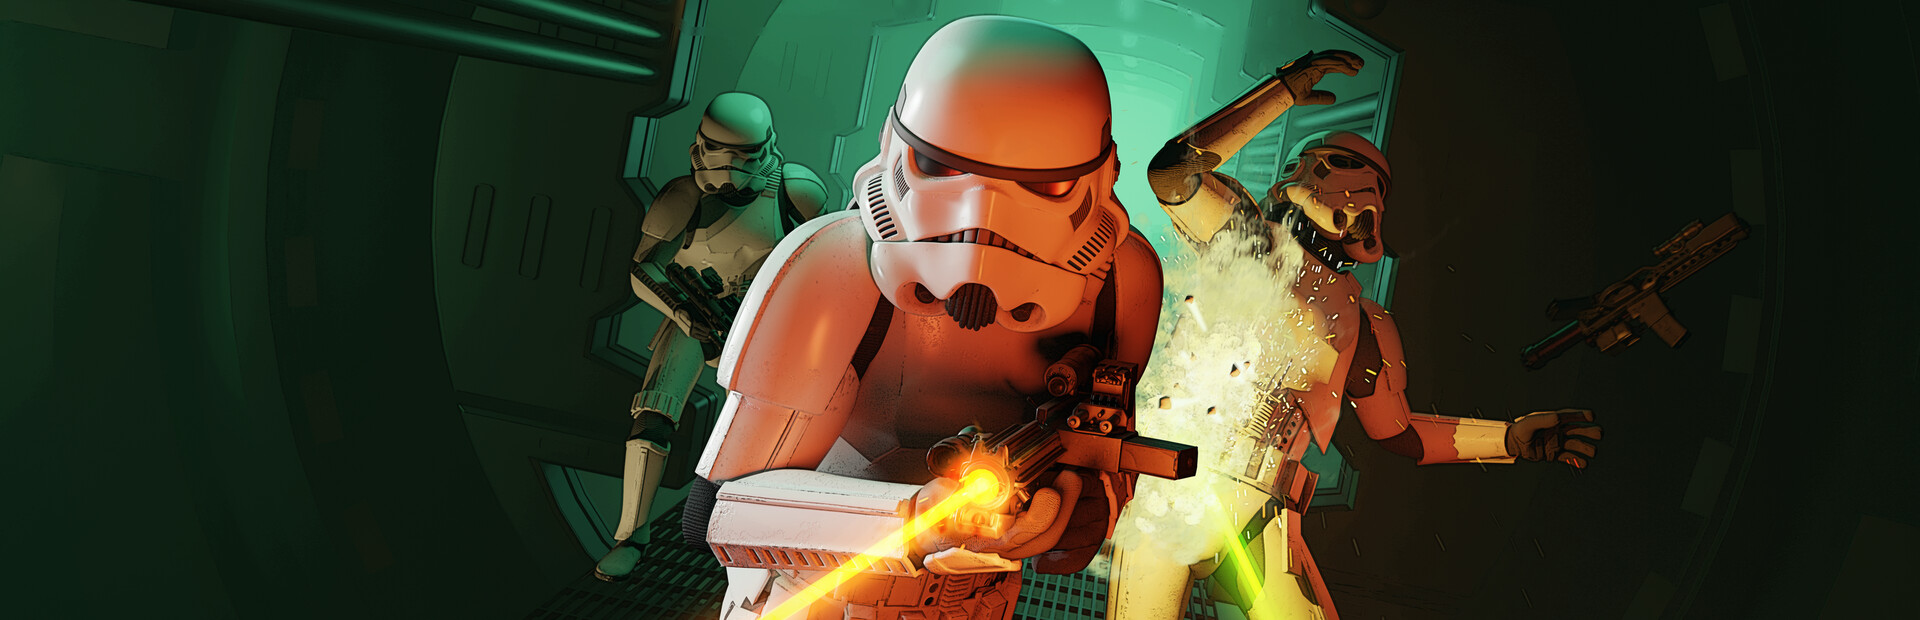 STAR WARS™: Dark Forces Remaster cover image